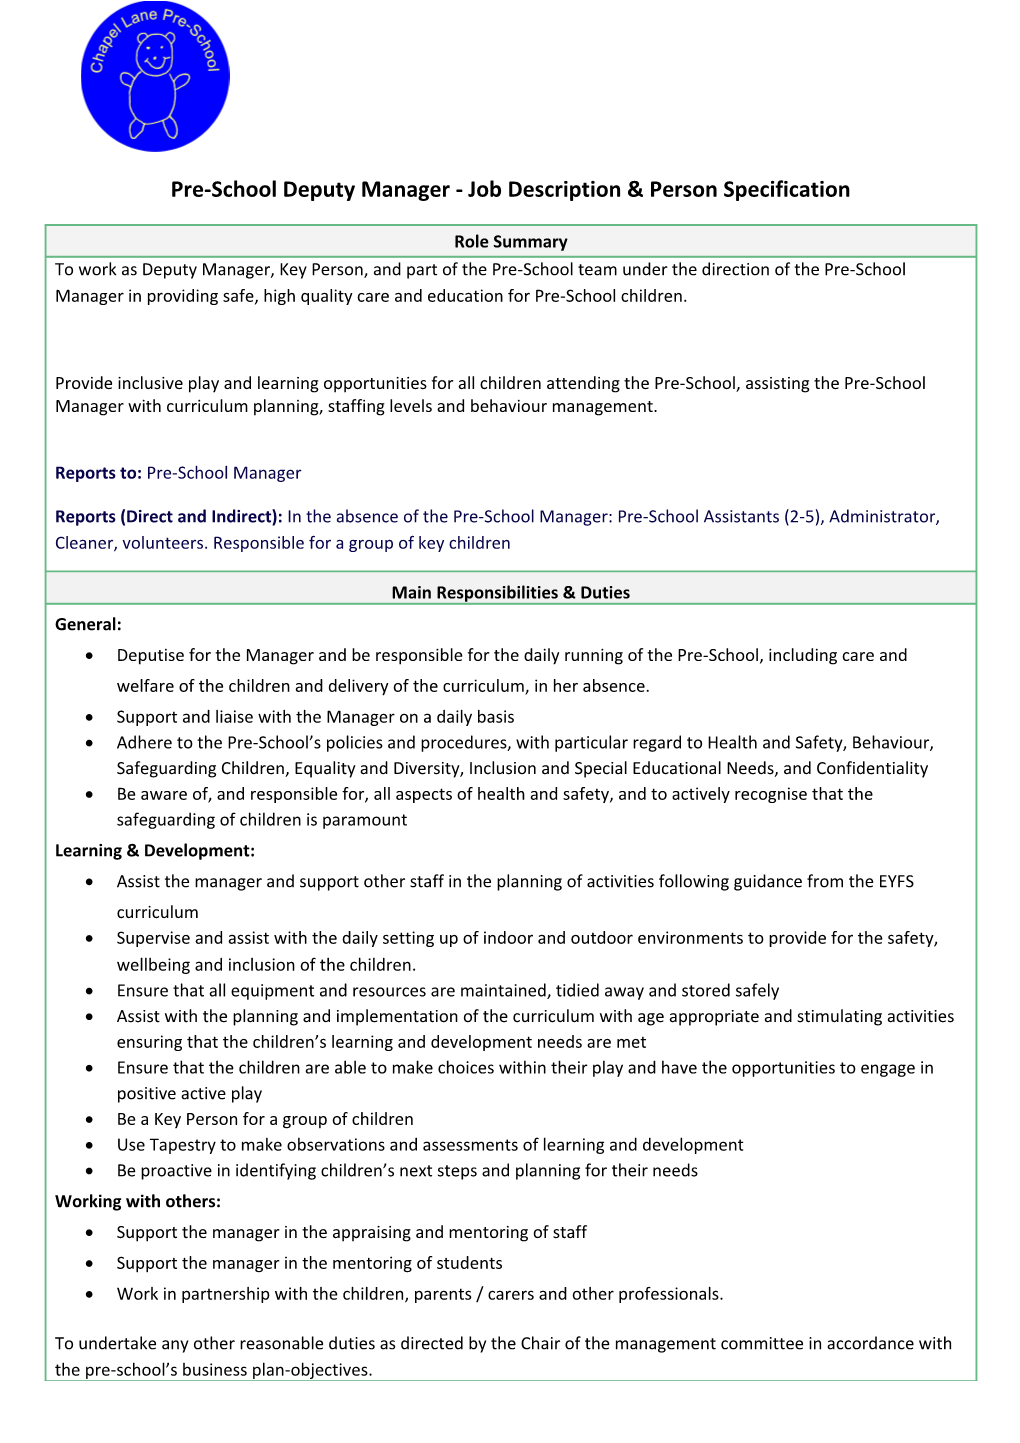 Pre-School Deputy Manager - Job Description & Person Specification